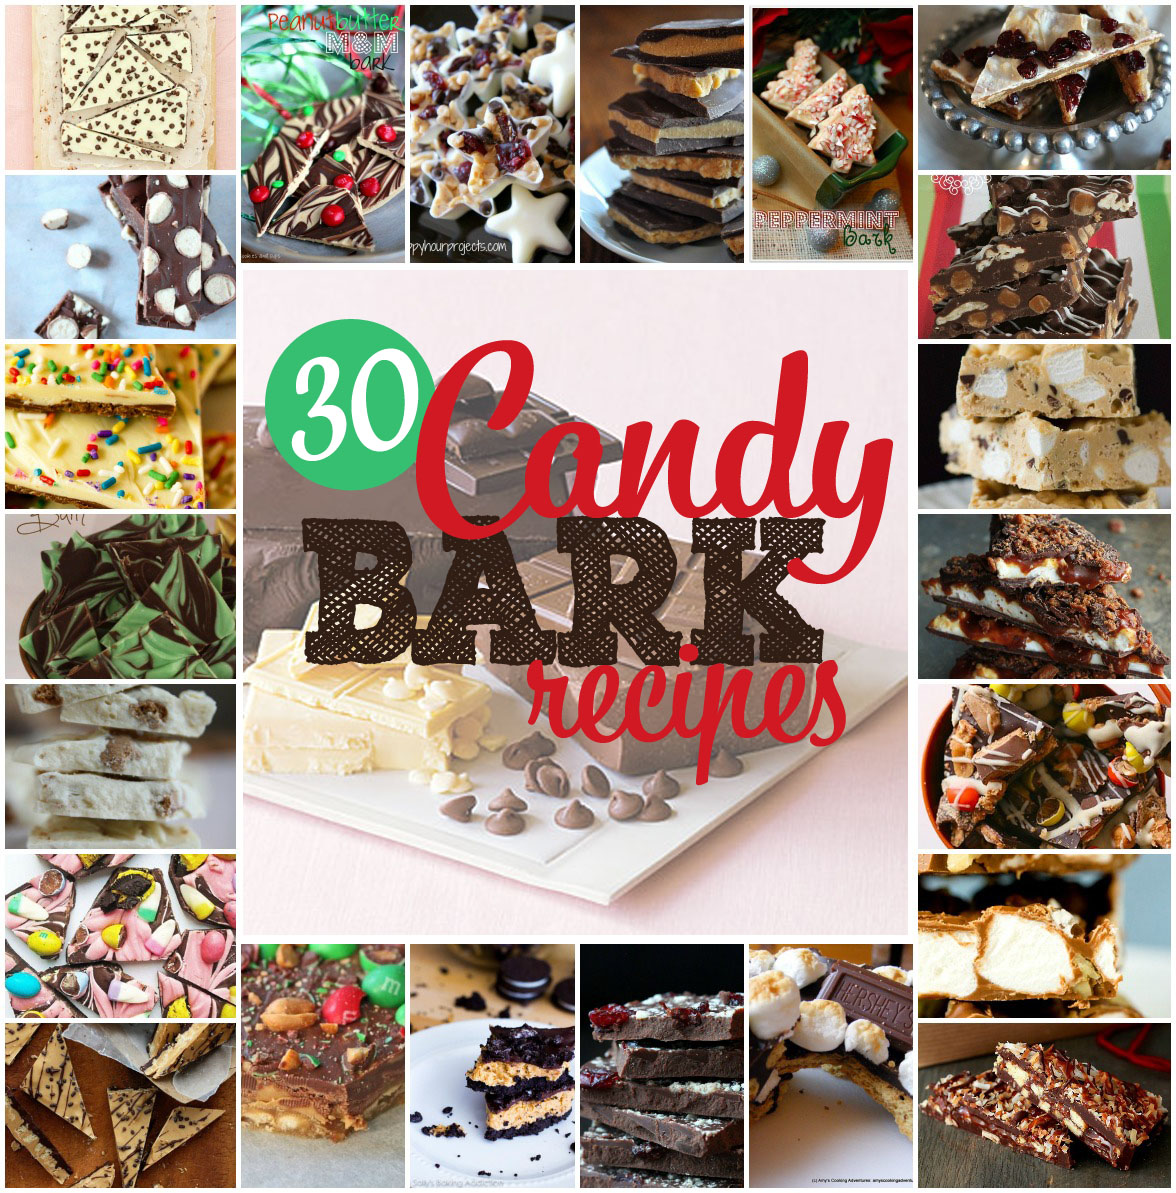 AllredDesign.net - 30 Delicious Candy Bark Recipes